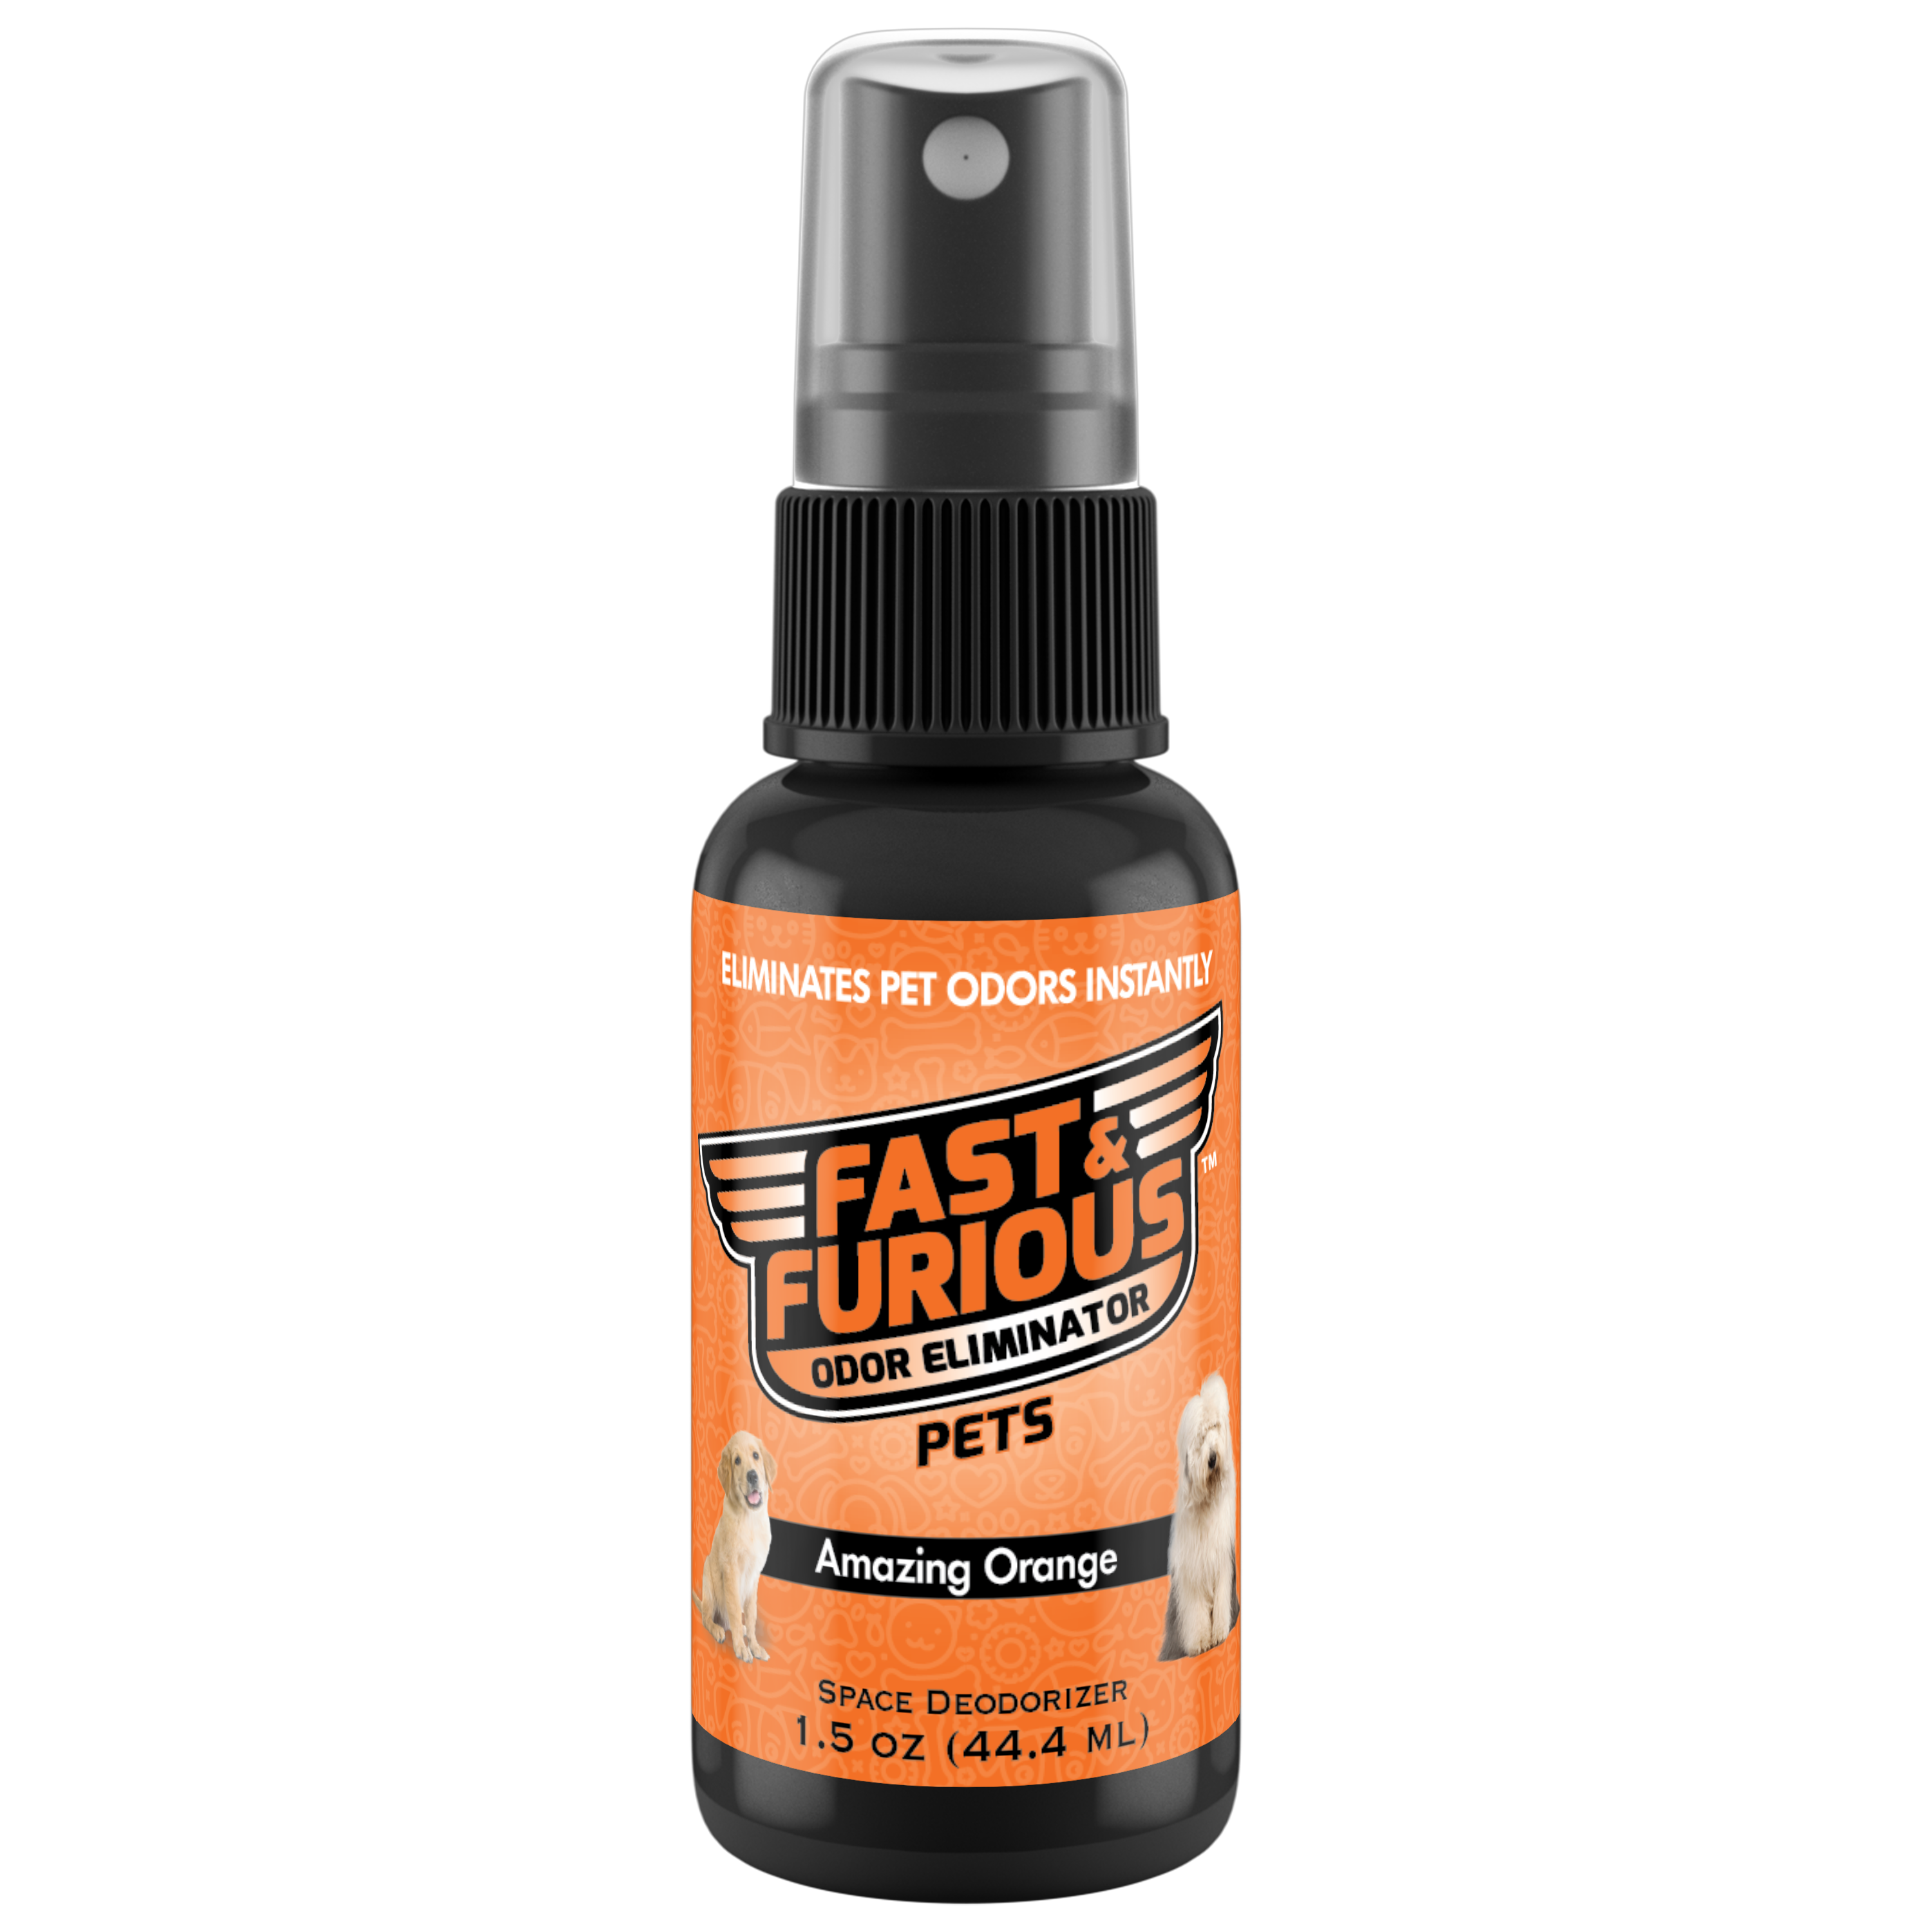 Fast and Furious Pets Odor Eliminator - Amazing Orange Scent